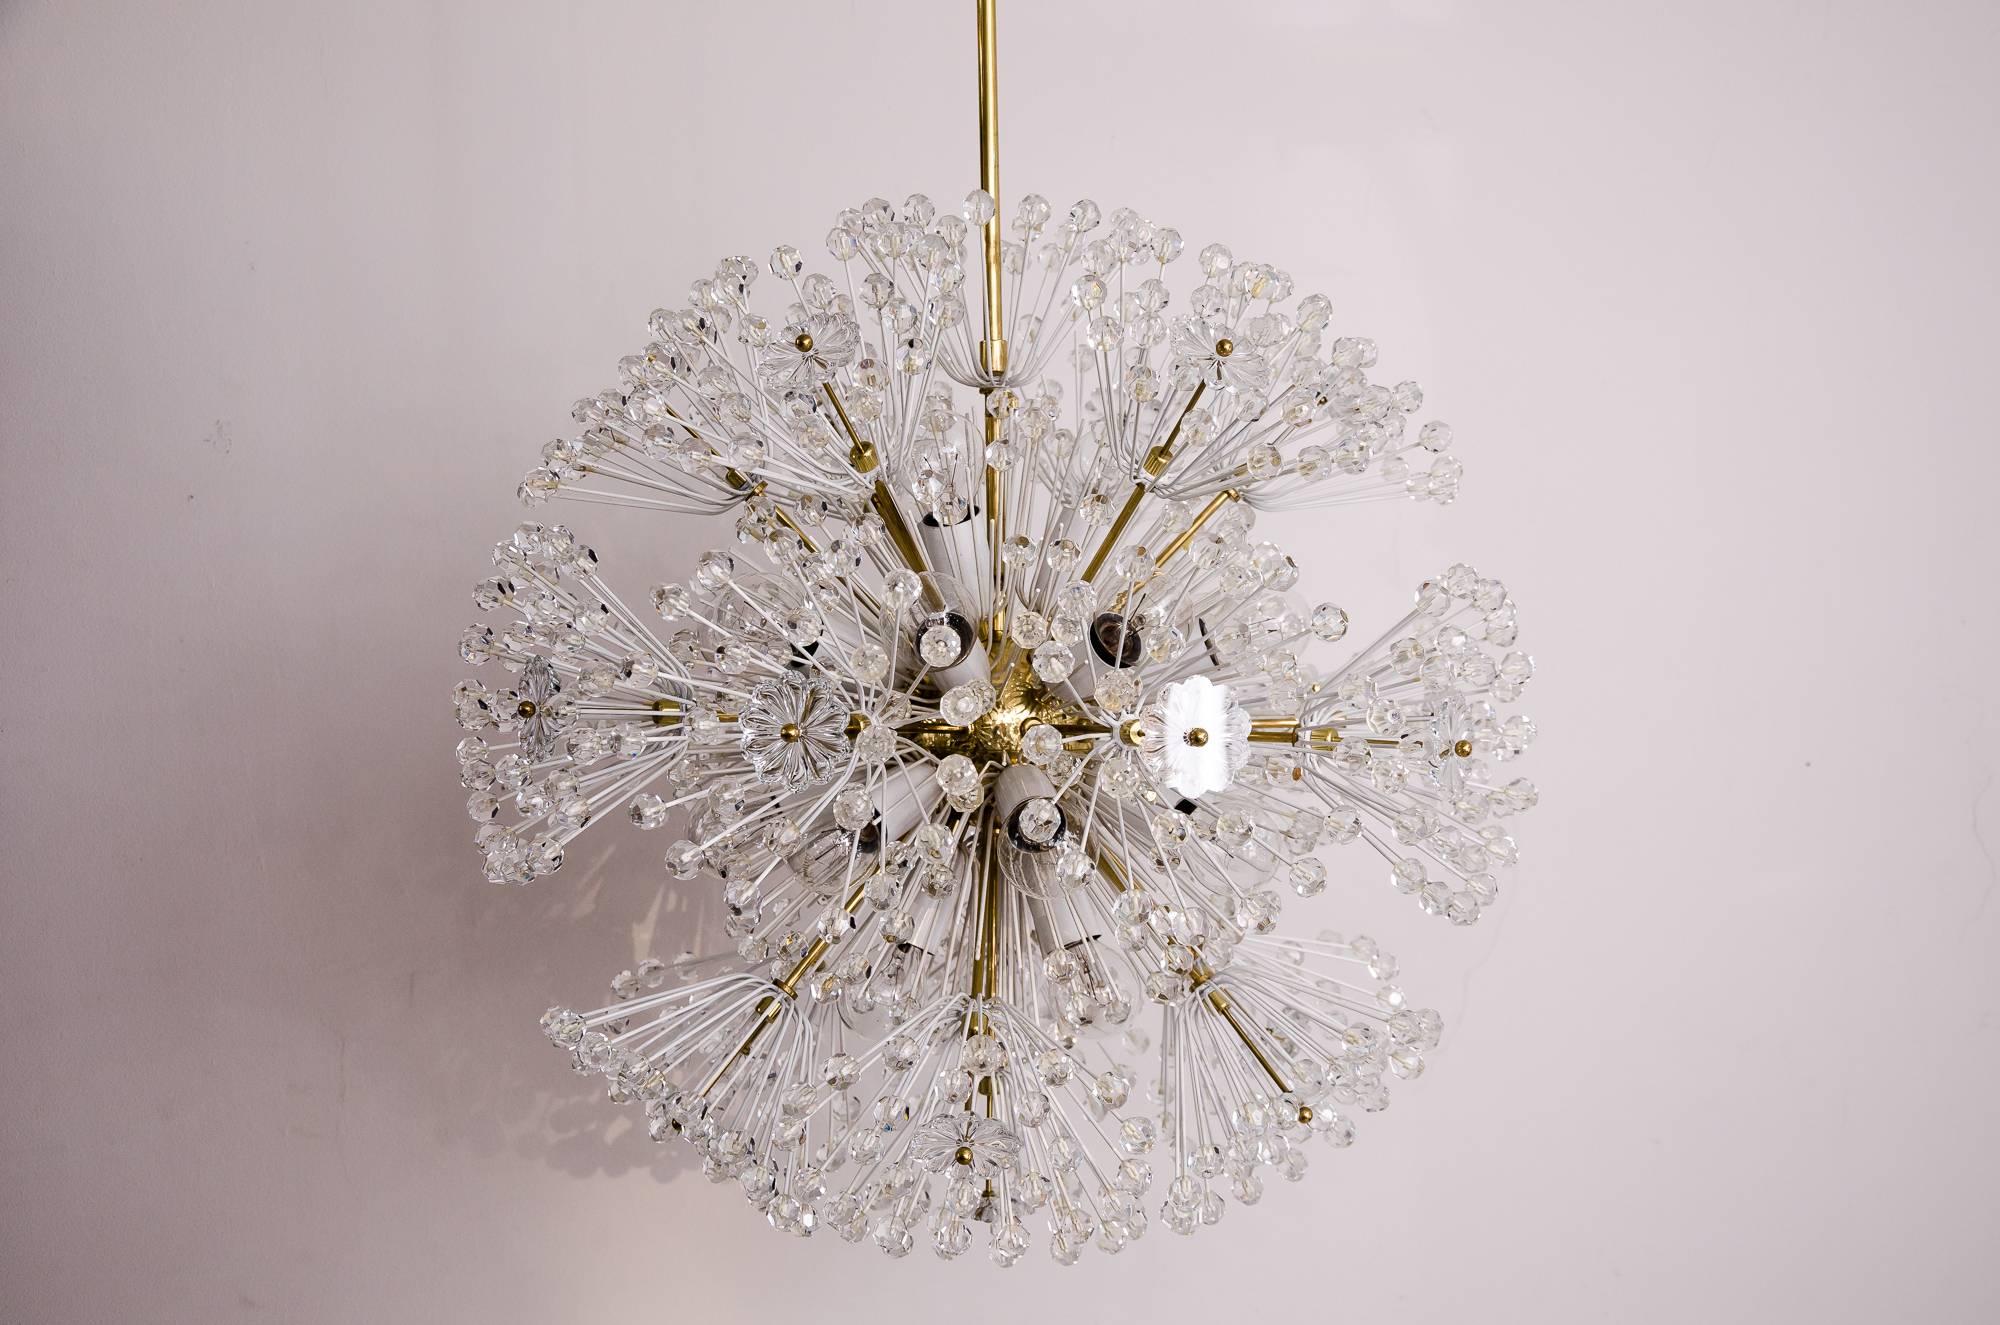 Rare large brass and glass Sputnik chandeliers by Emil Stejnar
Excellent original condition 
Twenty-Two bulbs.